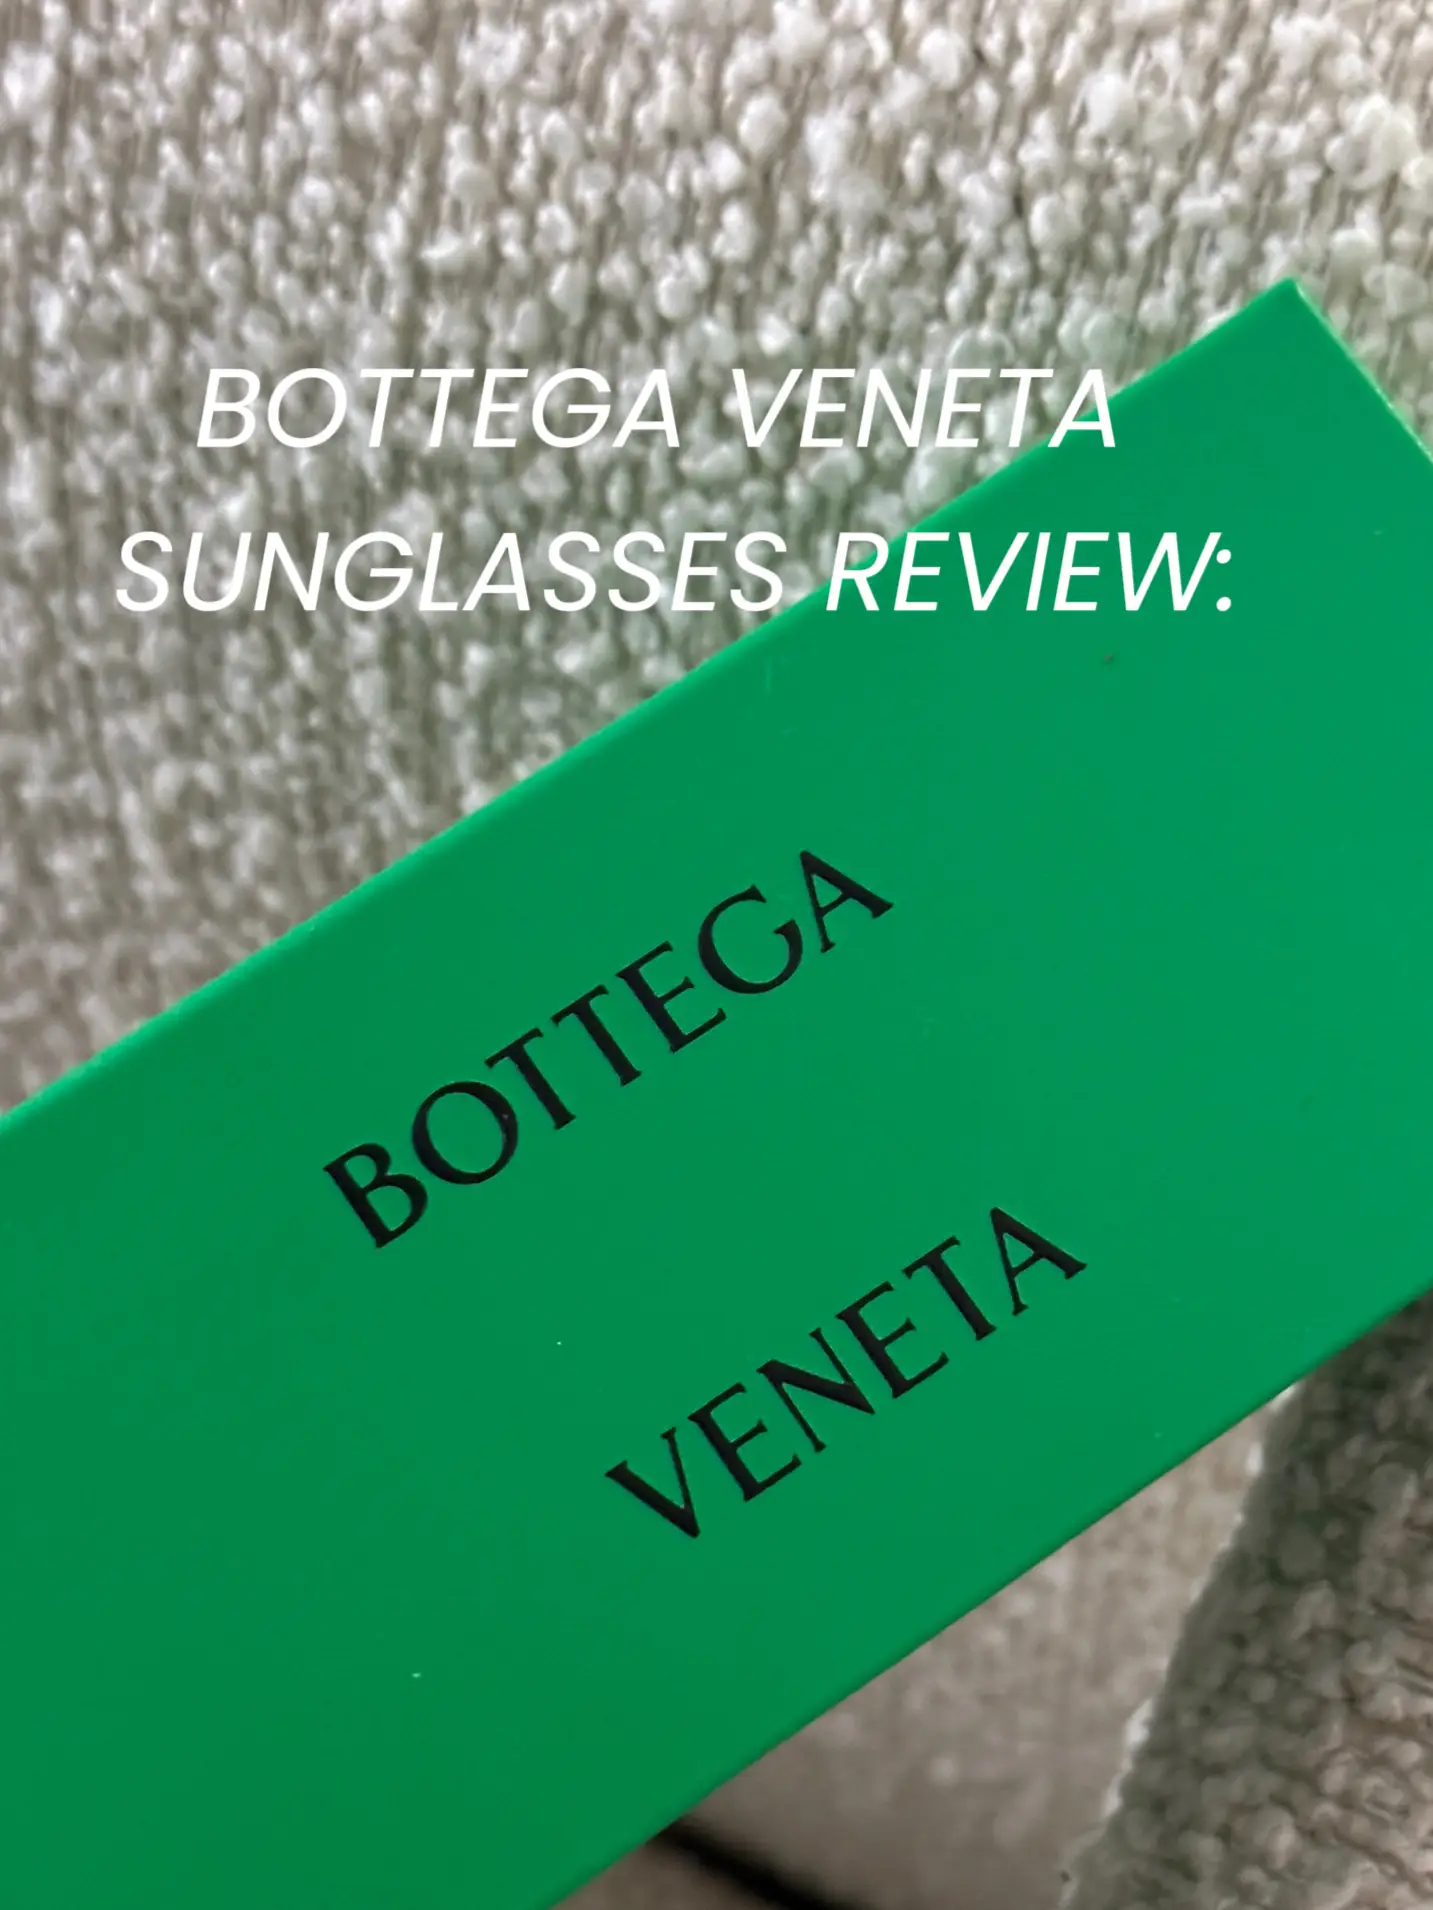 Bottega Veneta Small Jodie Review, Gallery posted by Selin Tufanoglu